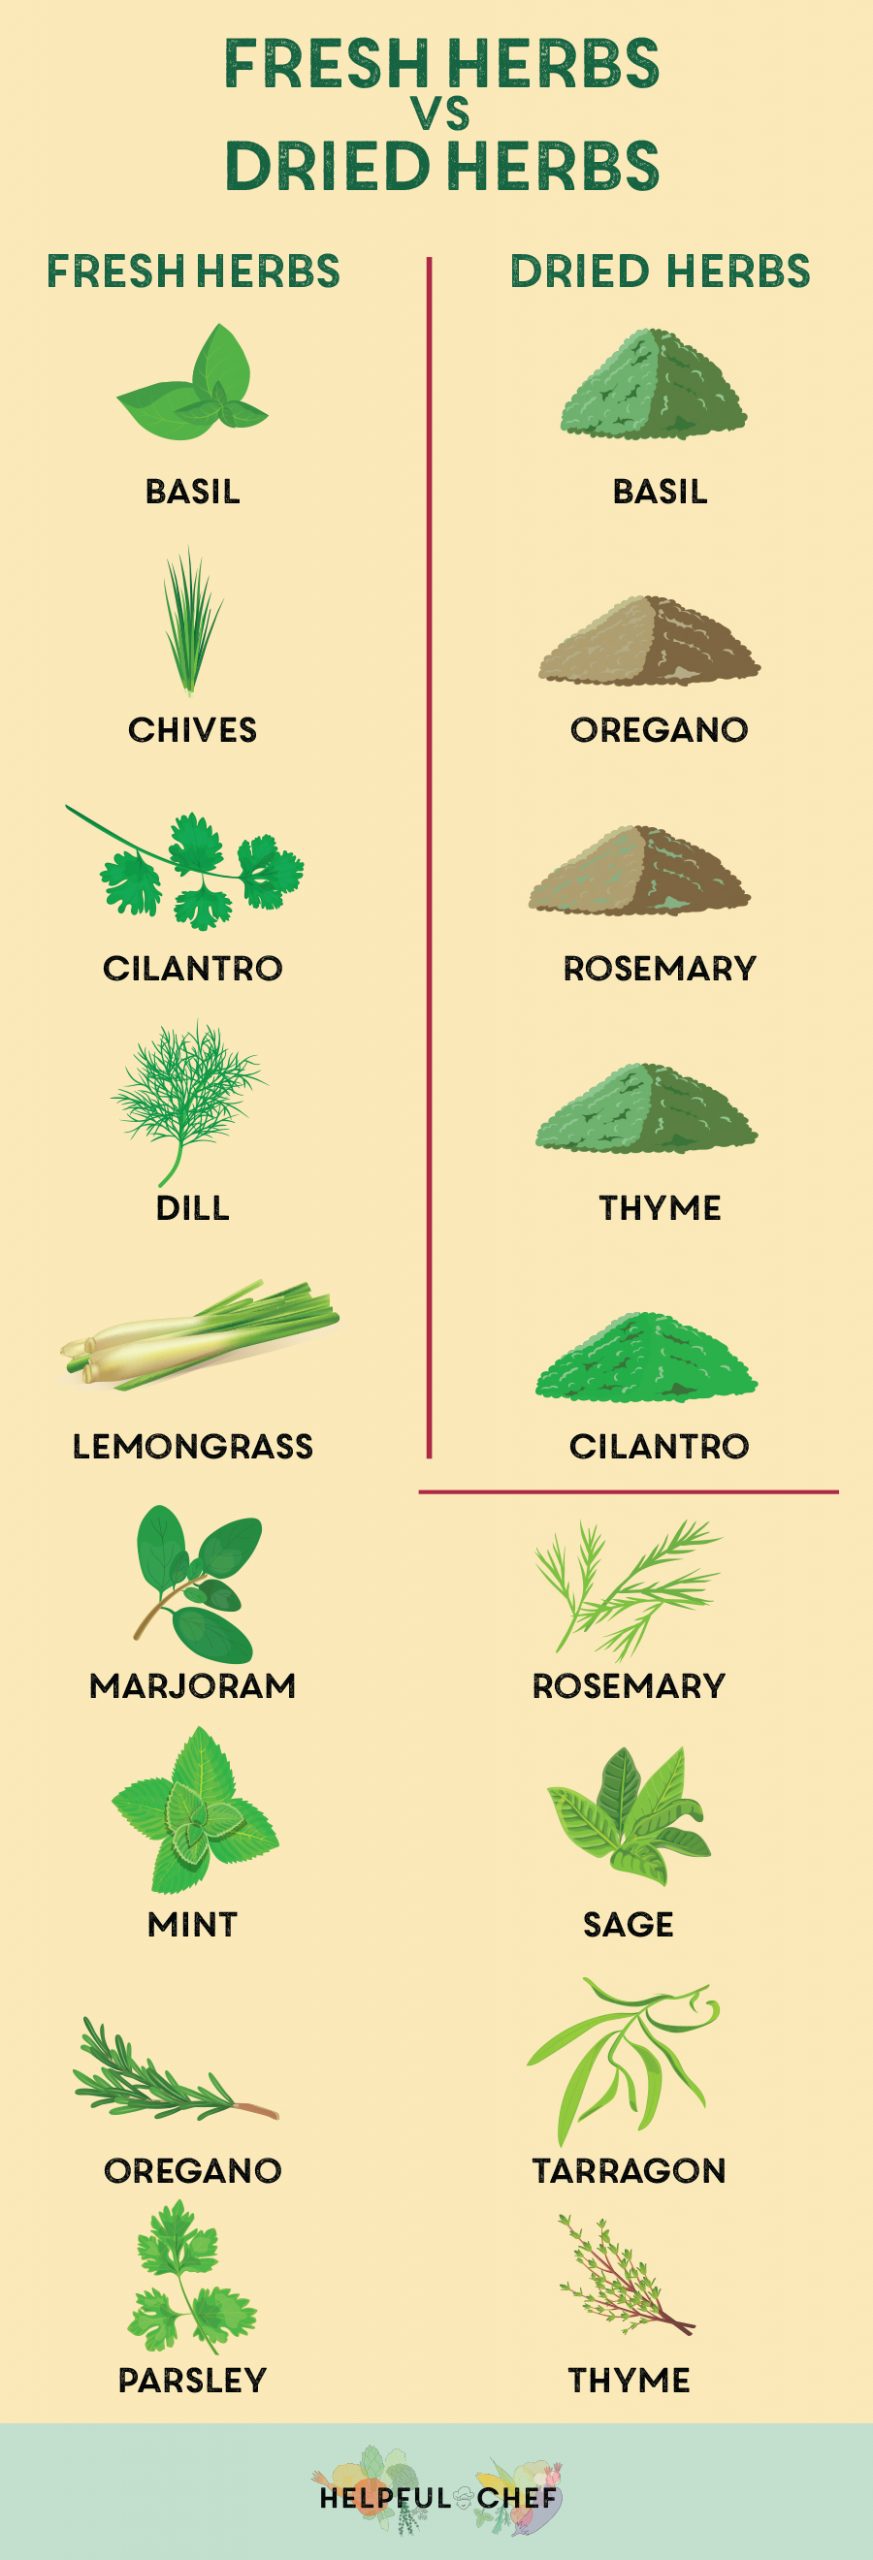 A visual guide to fresh vs dried herbs